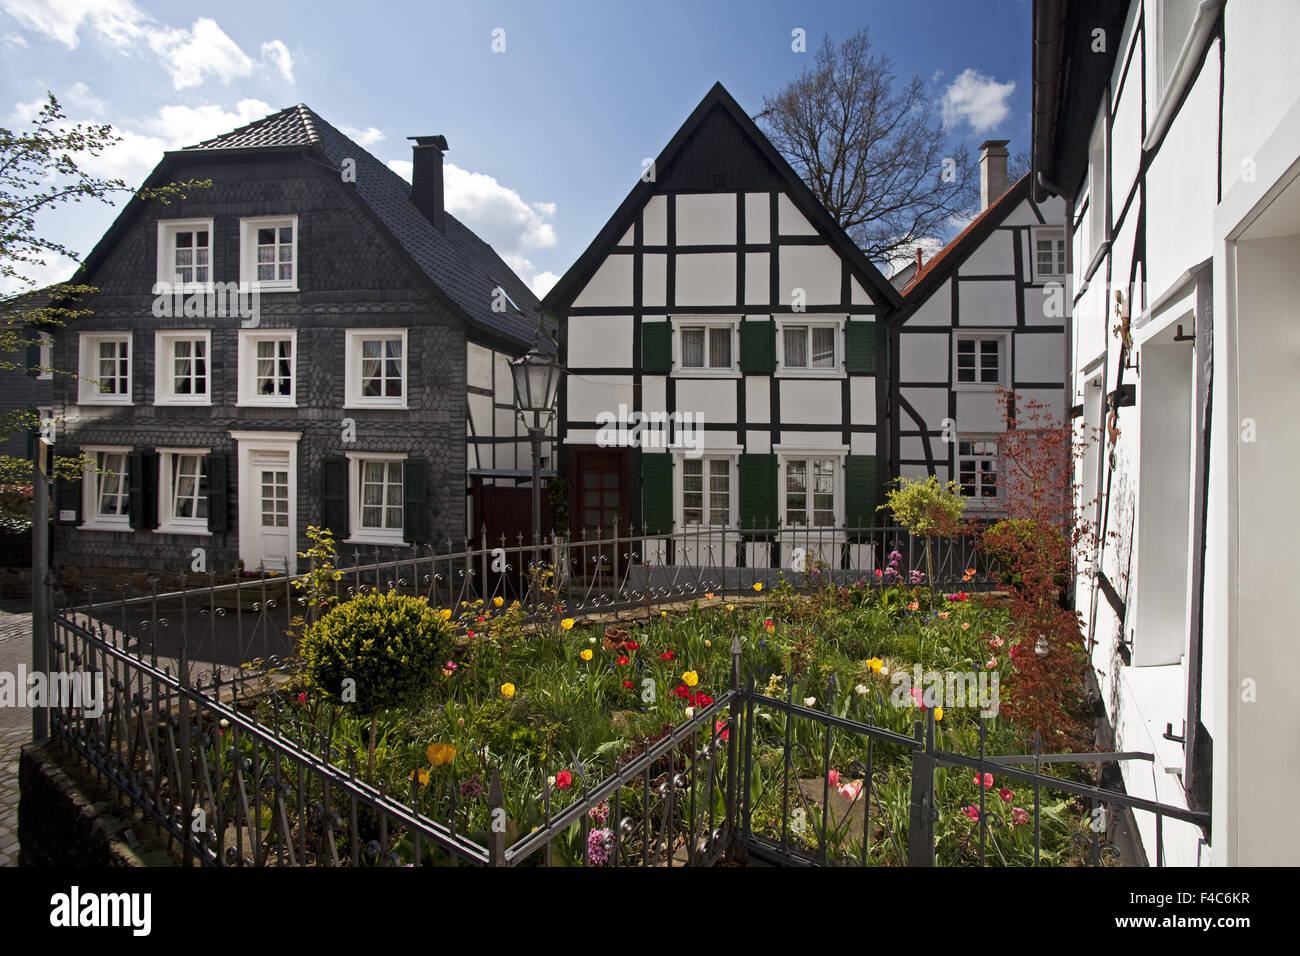 Old Town, Schwerte, Germany Stock Photo - Alamy